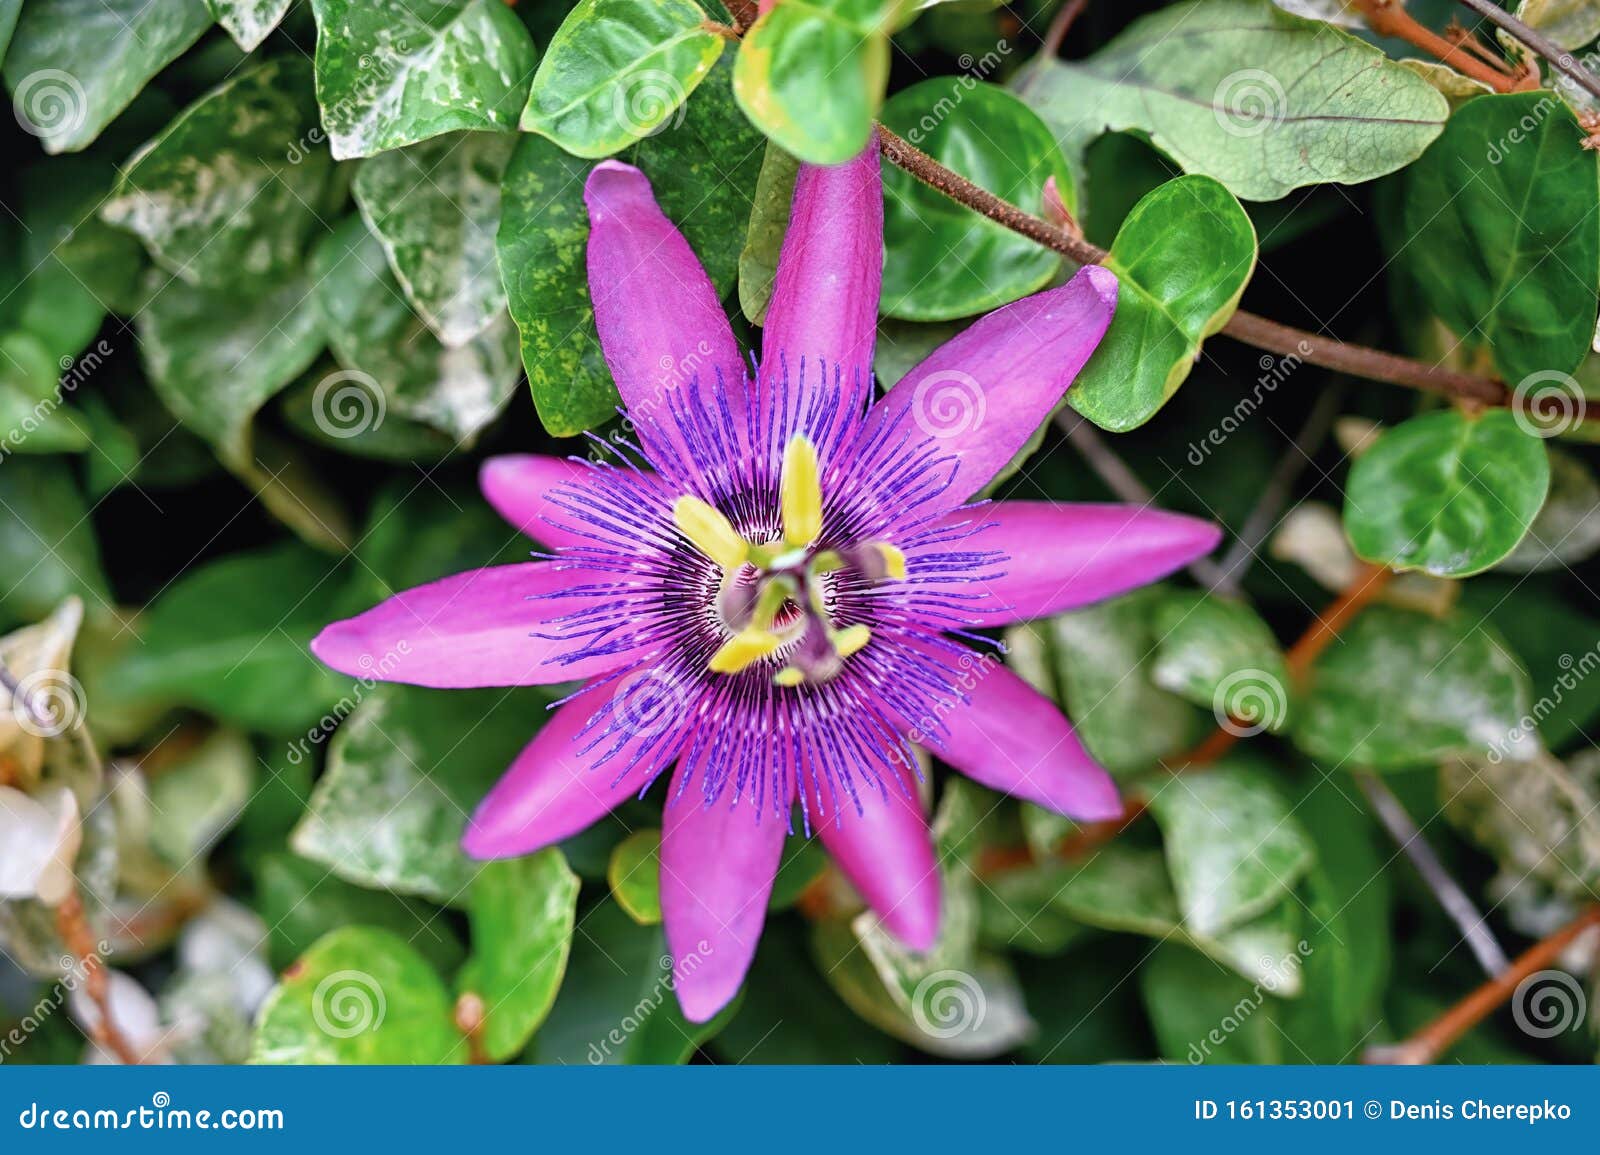 flower montenegro budva